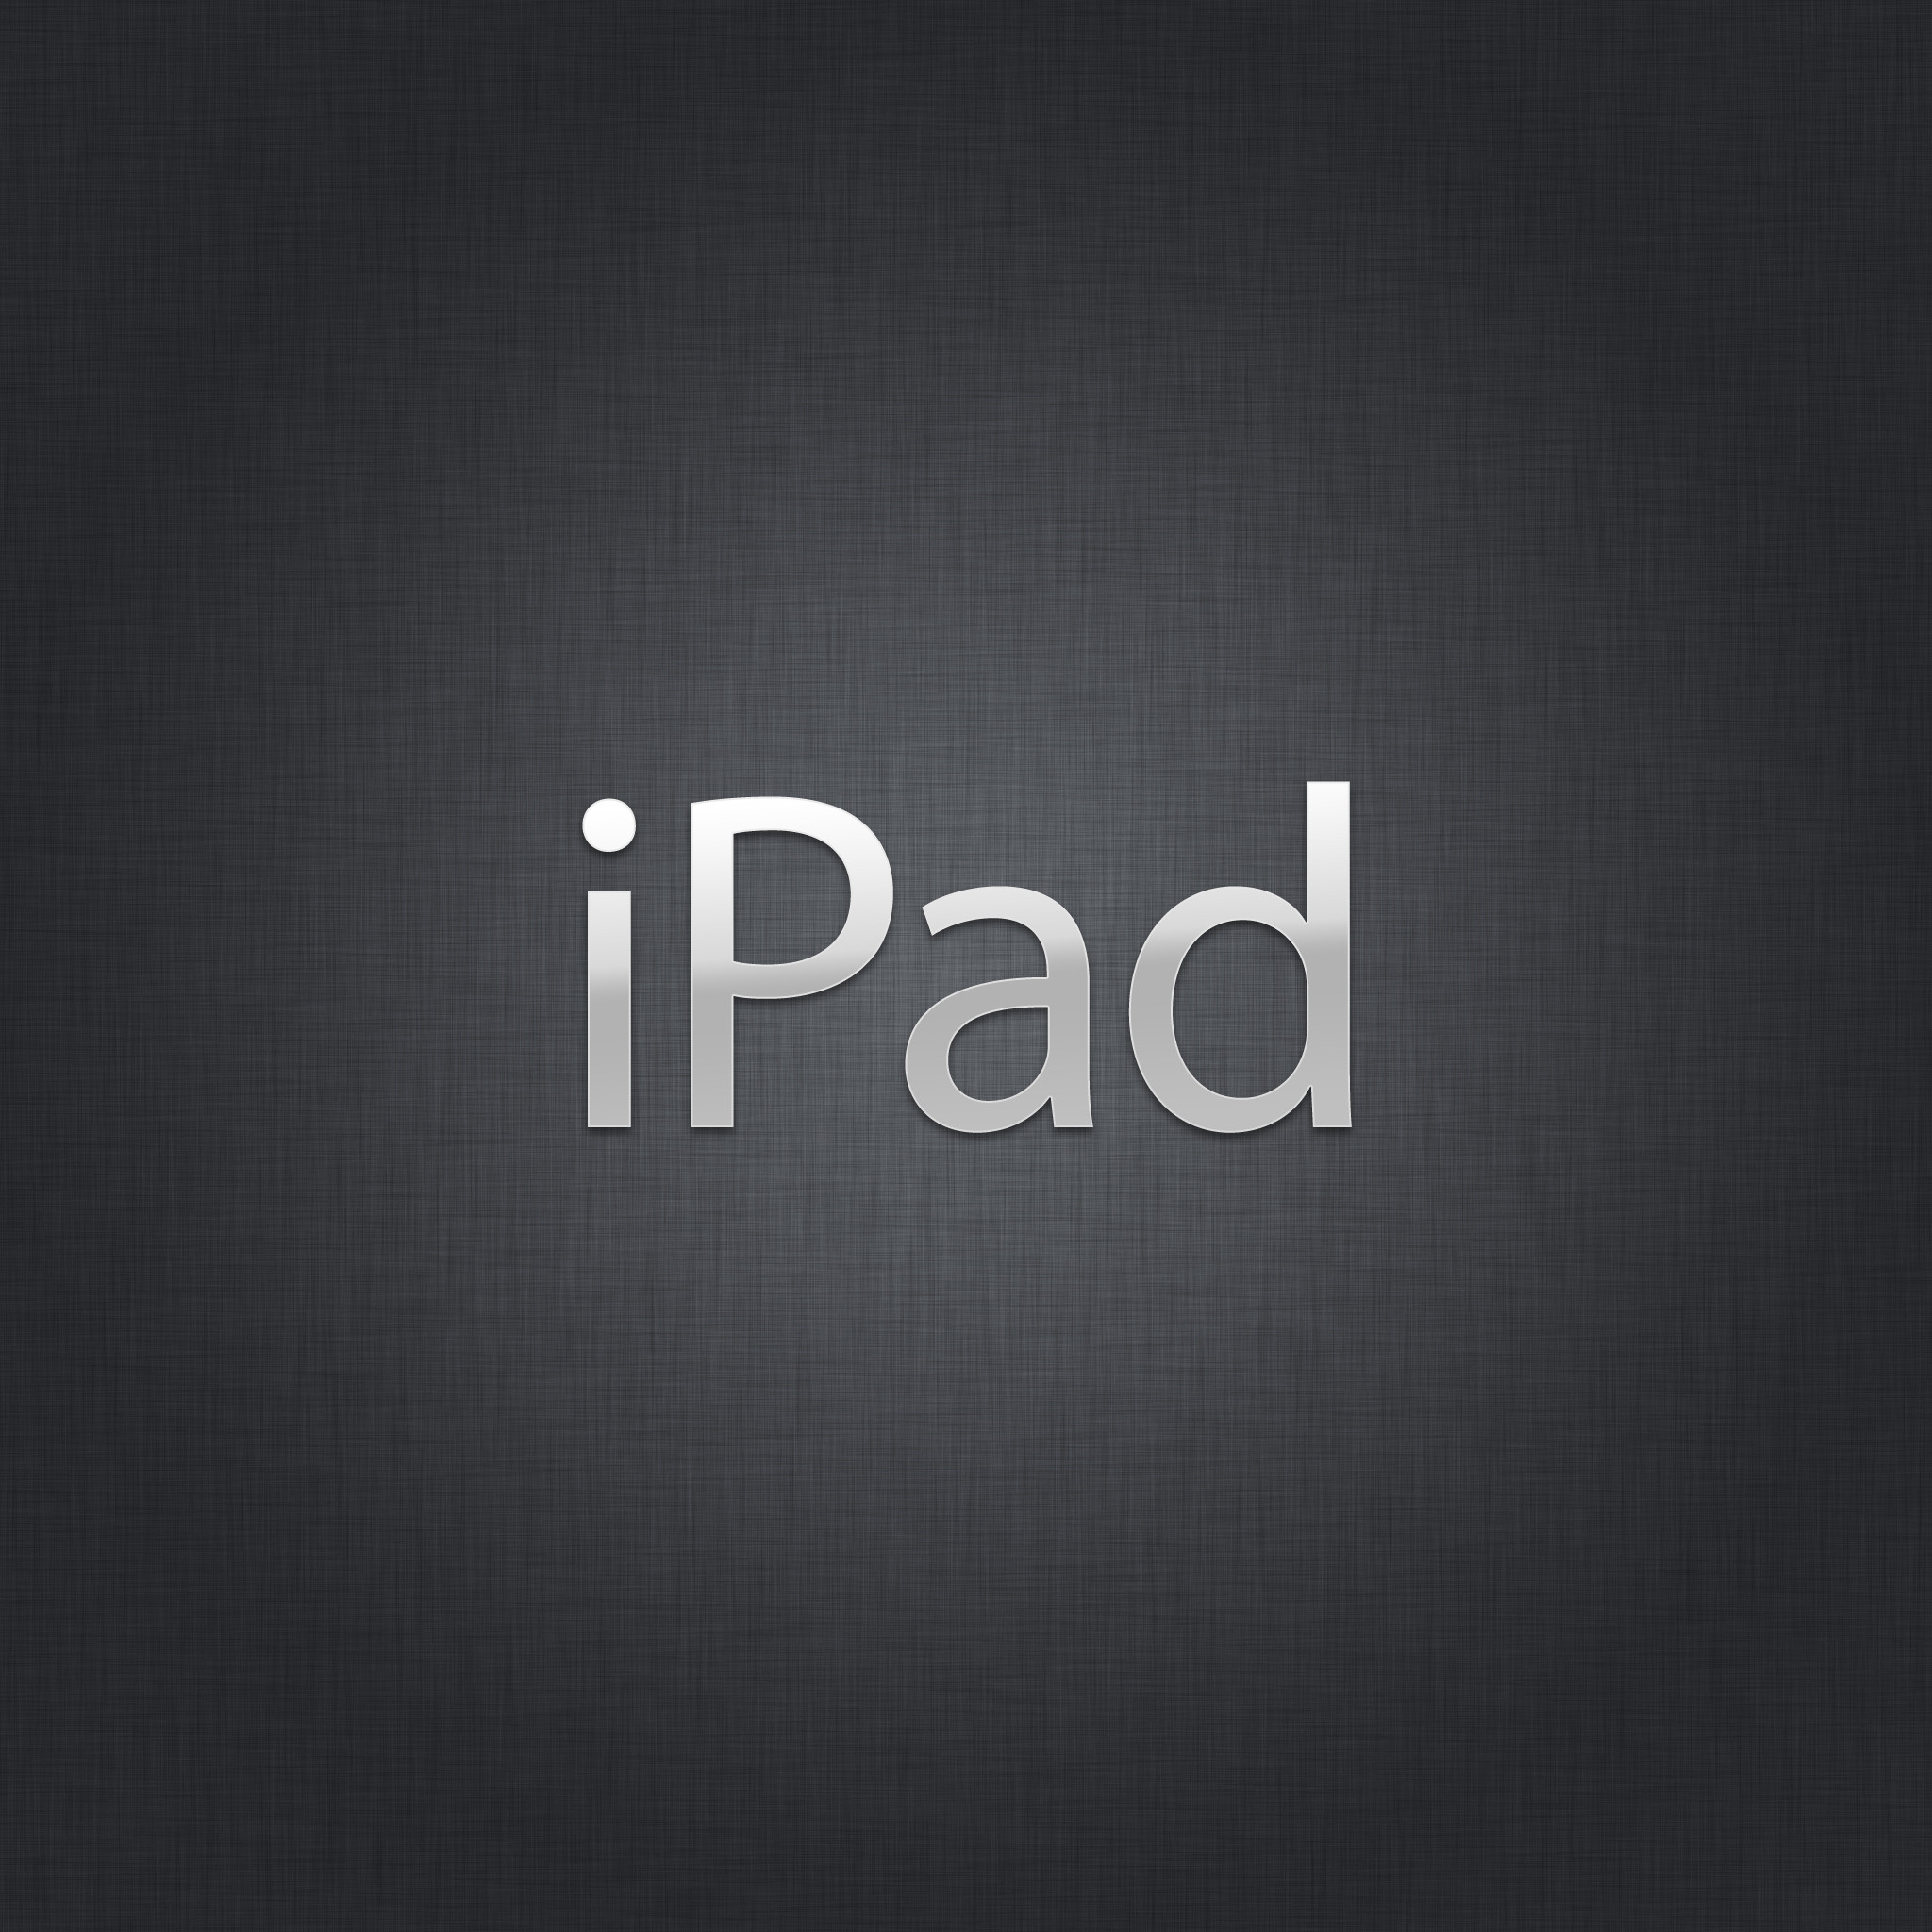 iPad iPhone Imac Macbook Pro Air Names Wallpaper HD